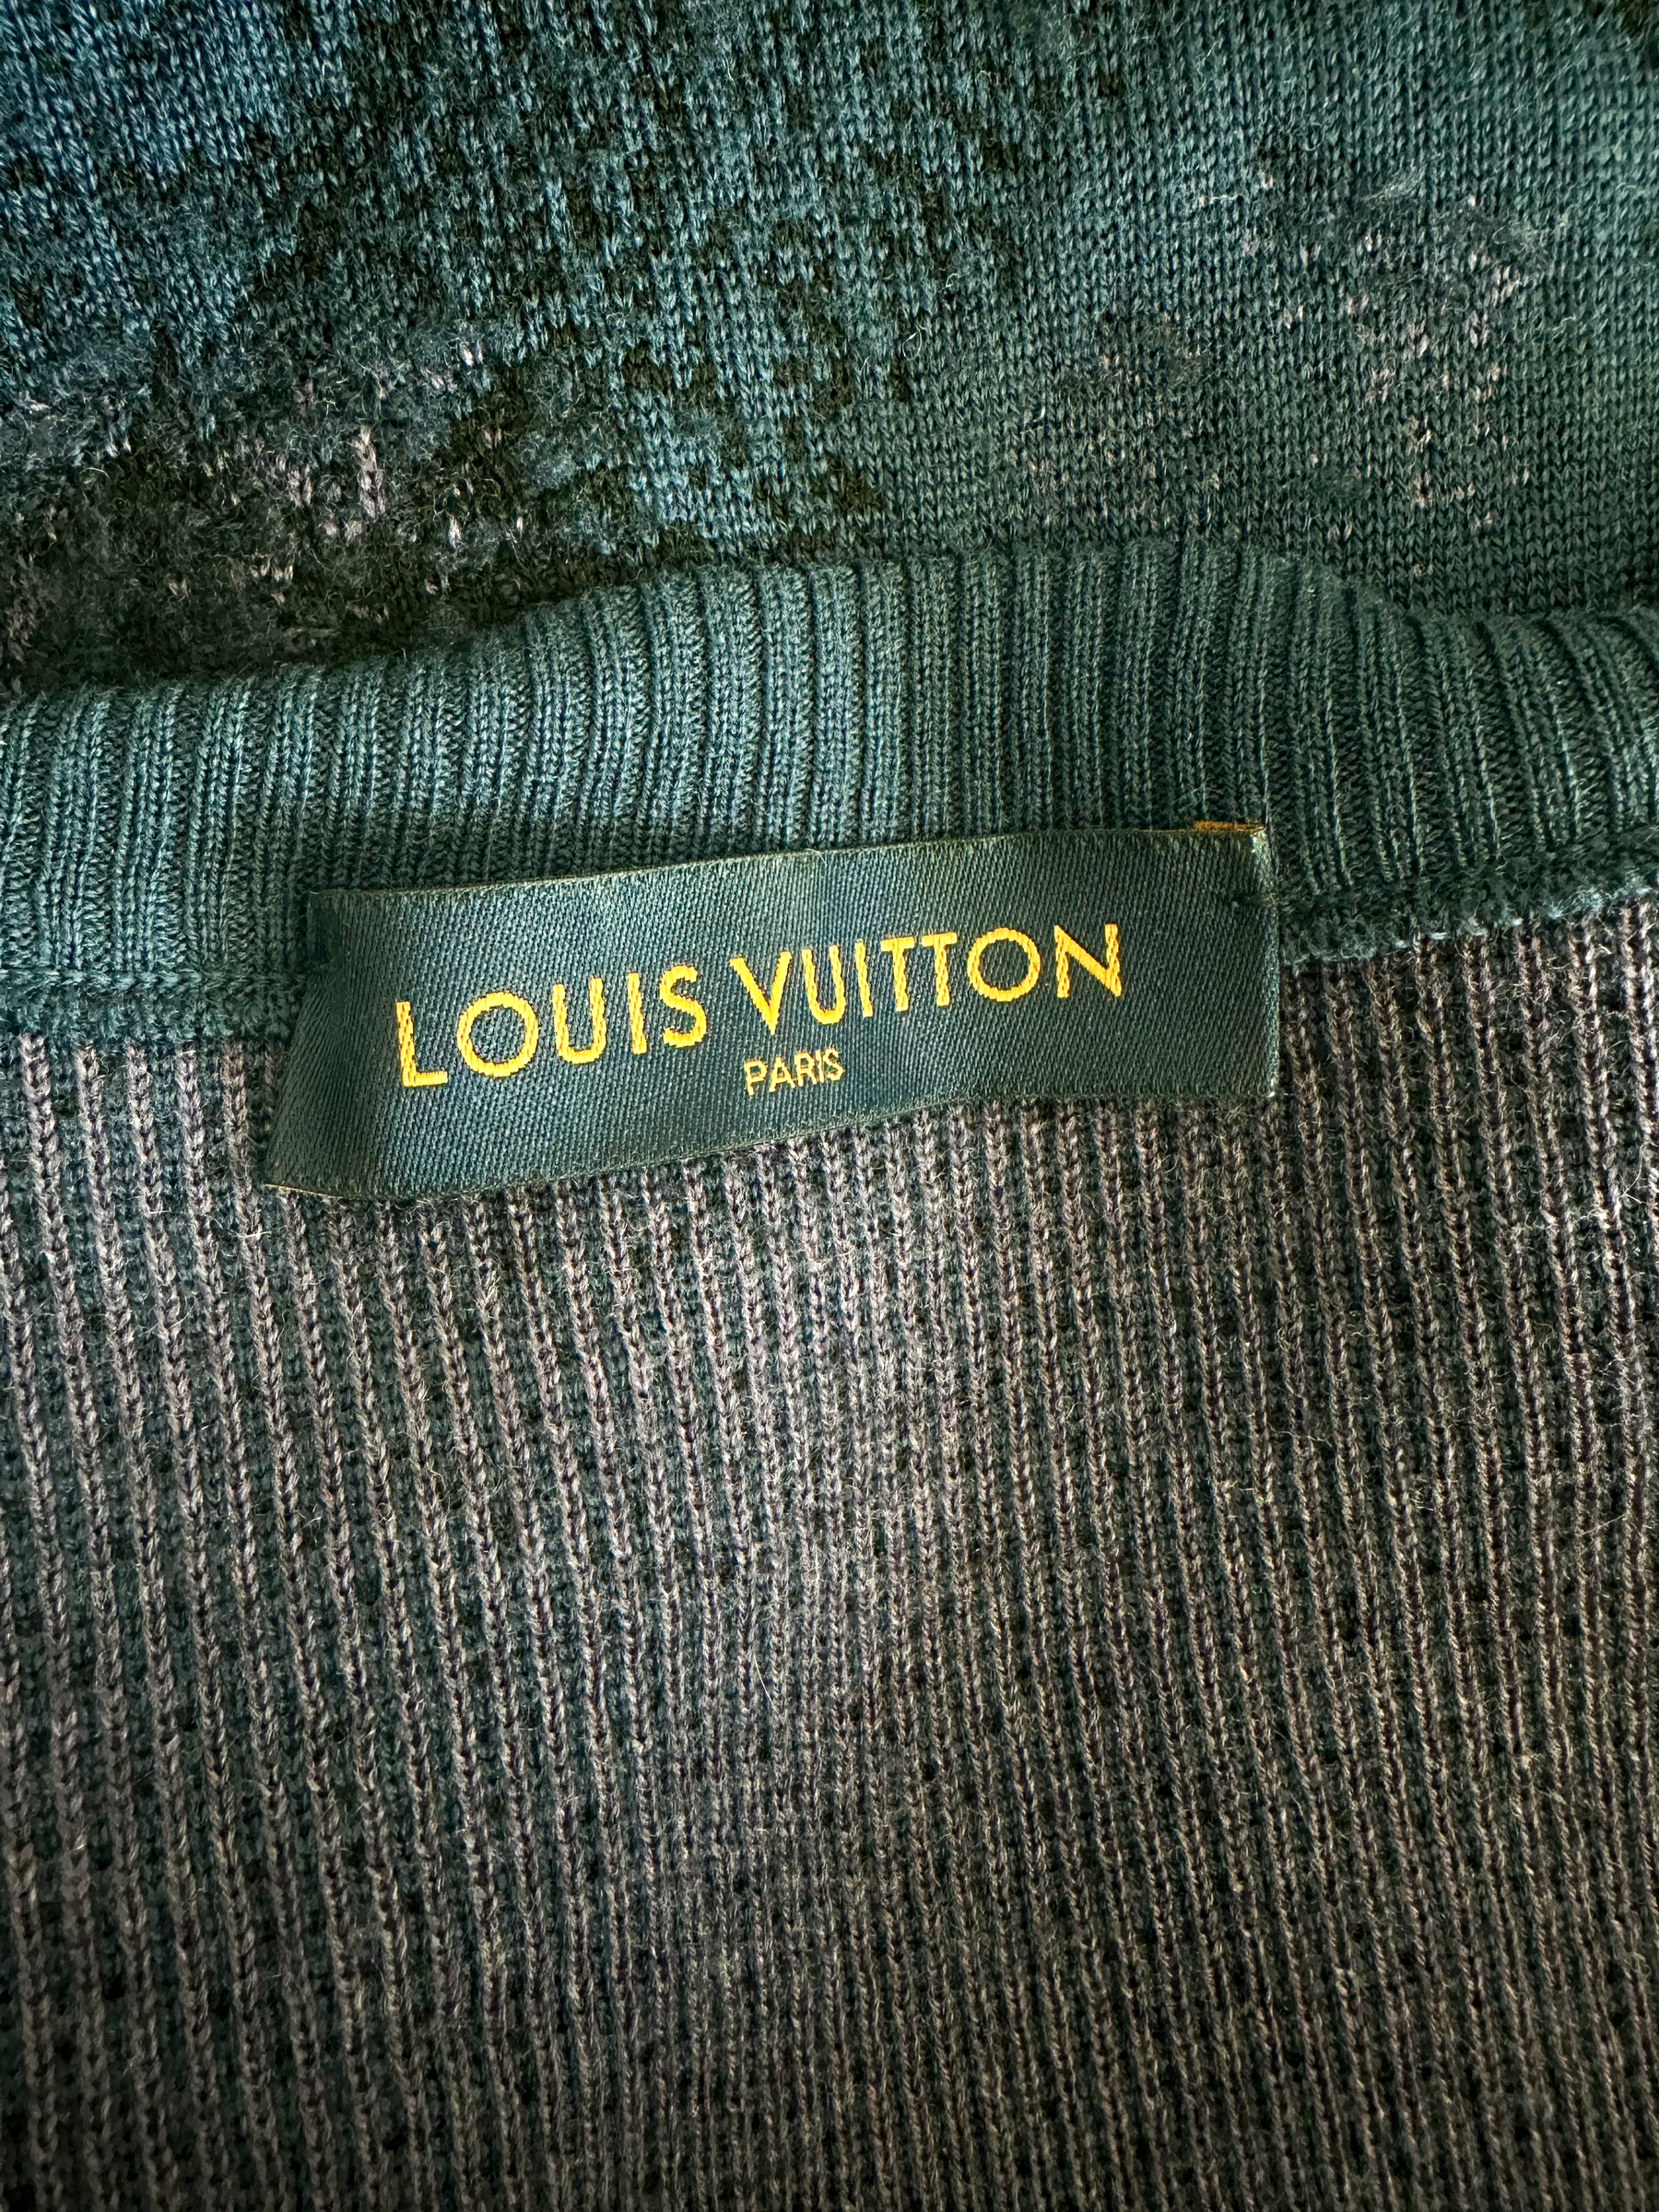 Louis Vuitton SS19 Yellow Brick Road Sweater